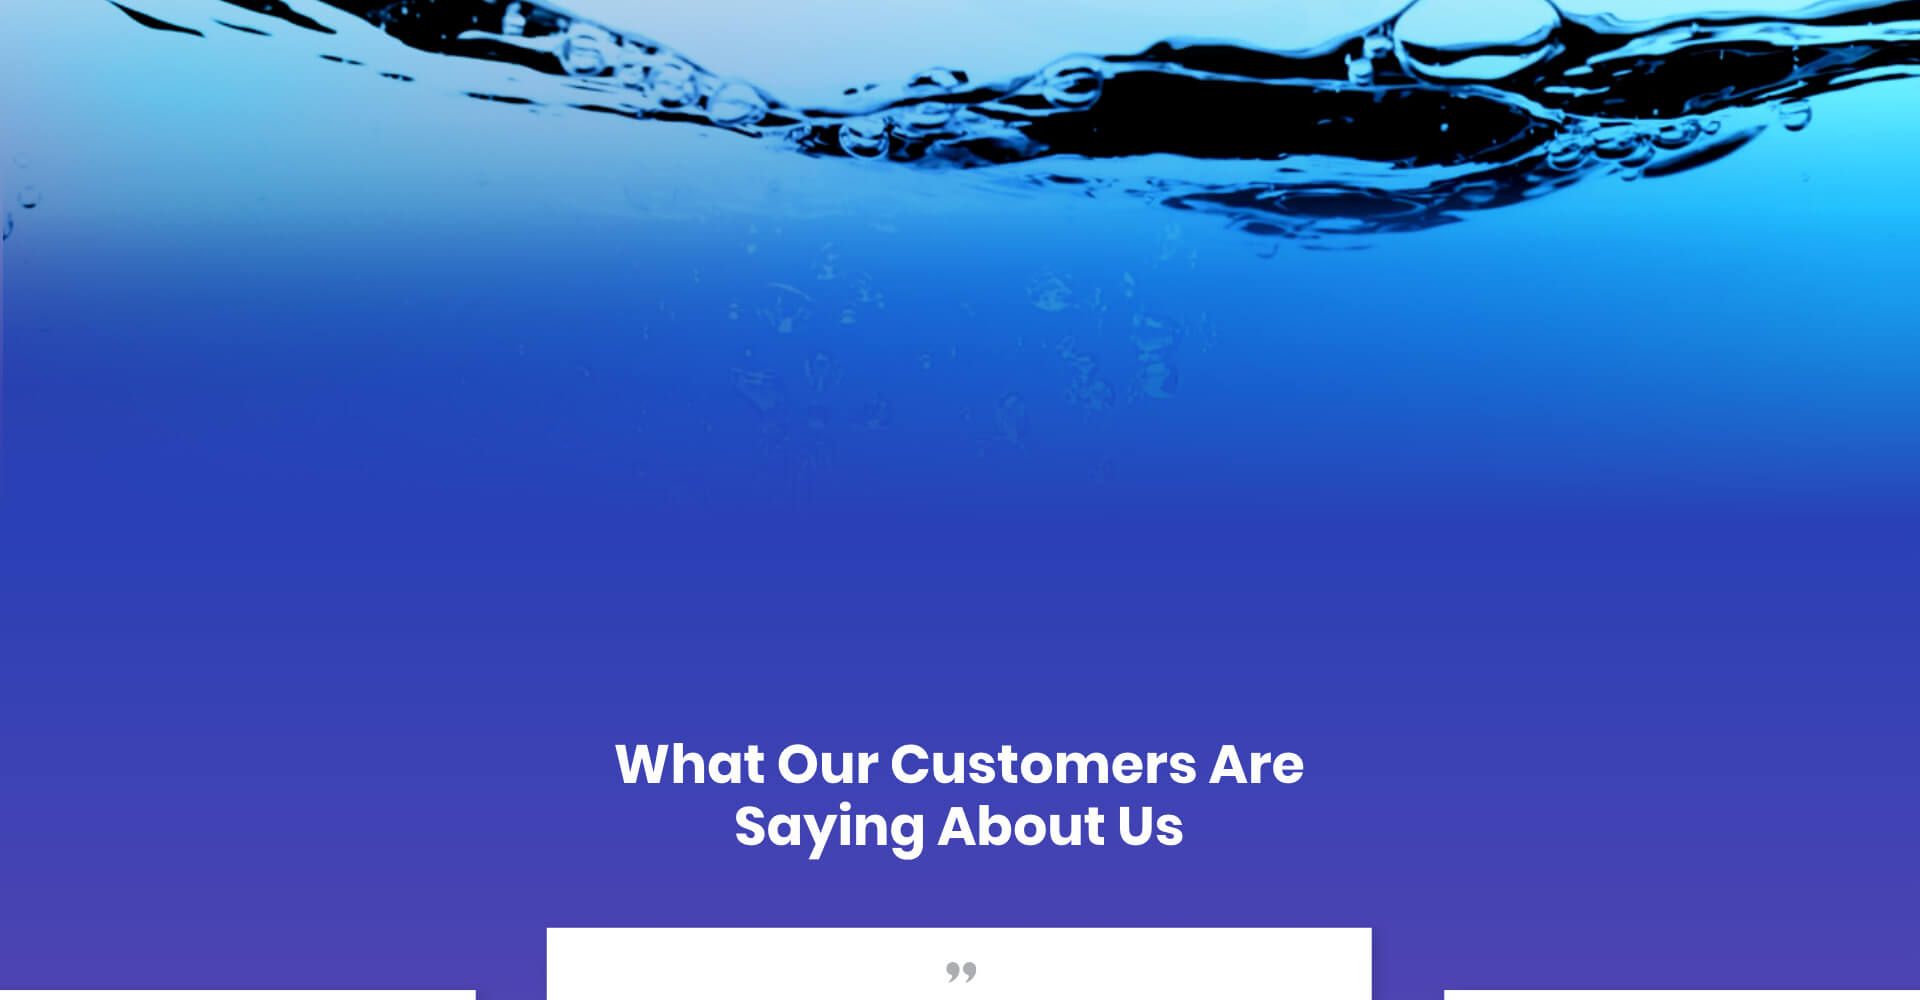 Homepage screenshot of Aquacycl